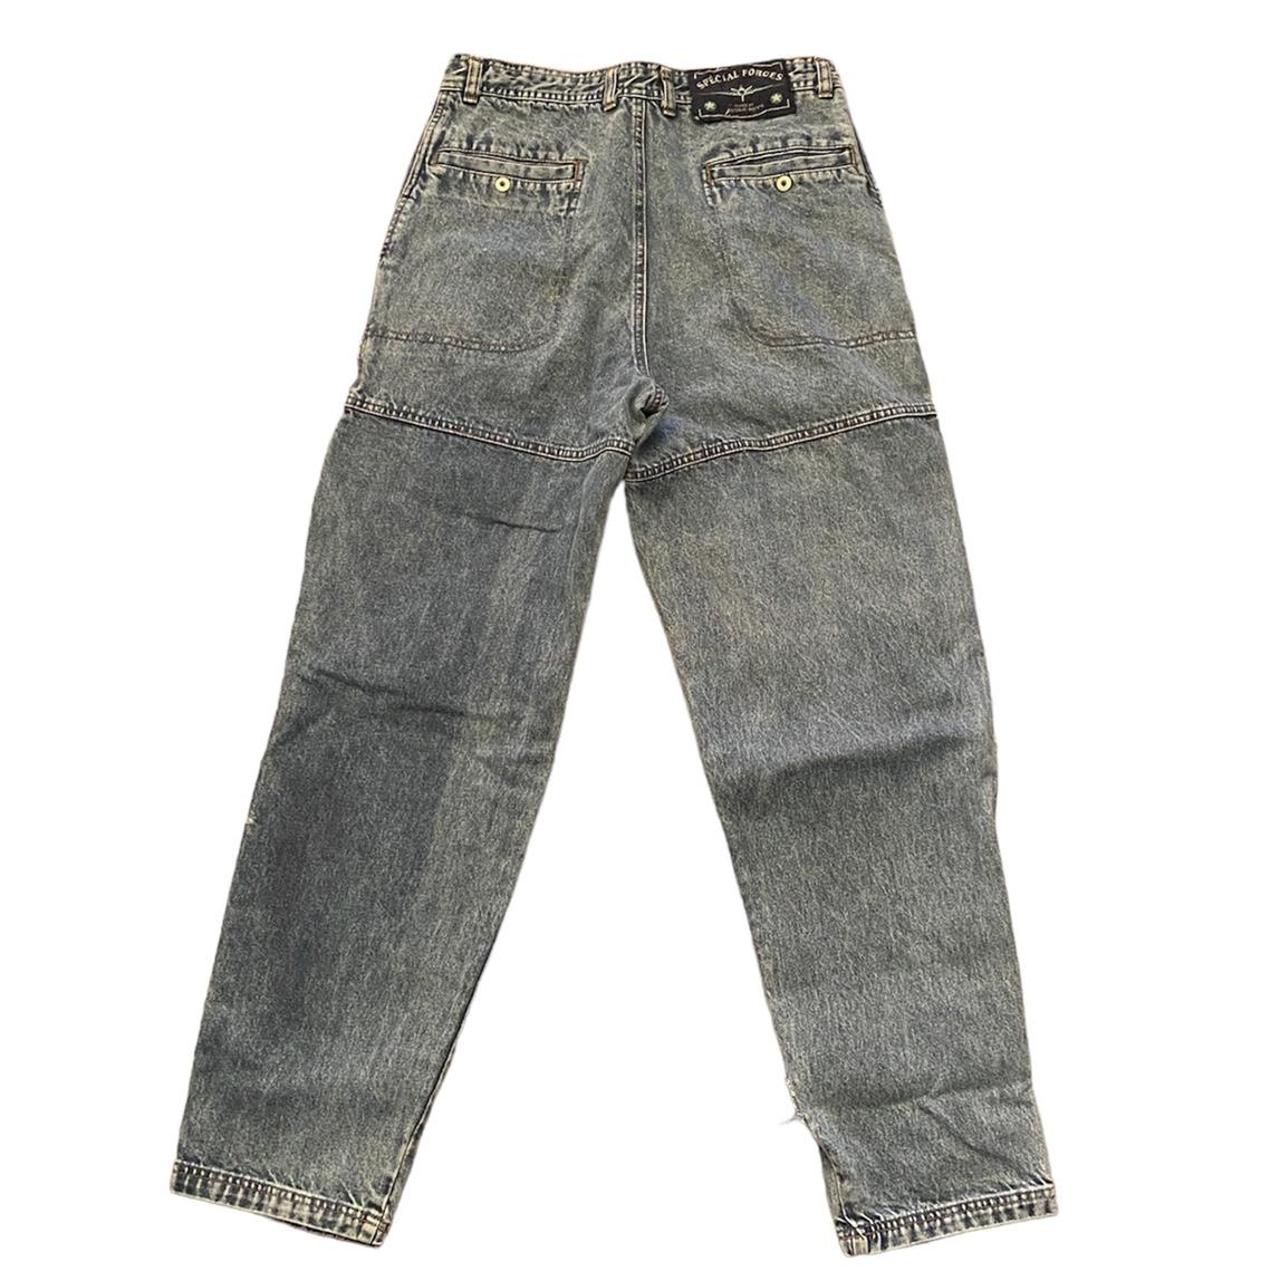 Vintage Bugle Boy Jeans Front Cargo Pockets, with... - Depop